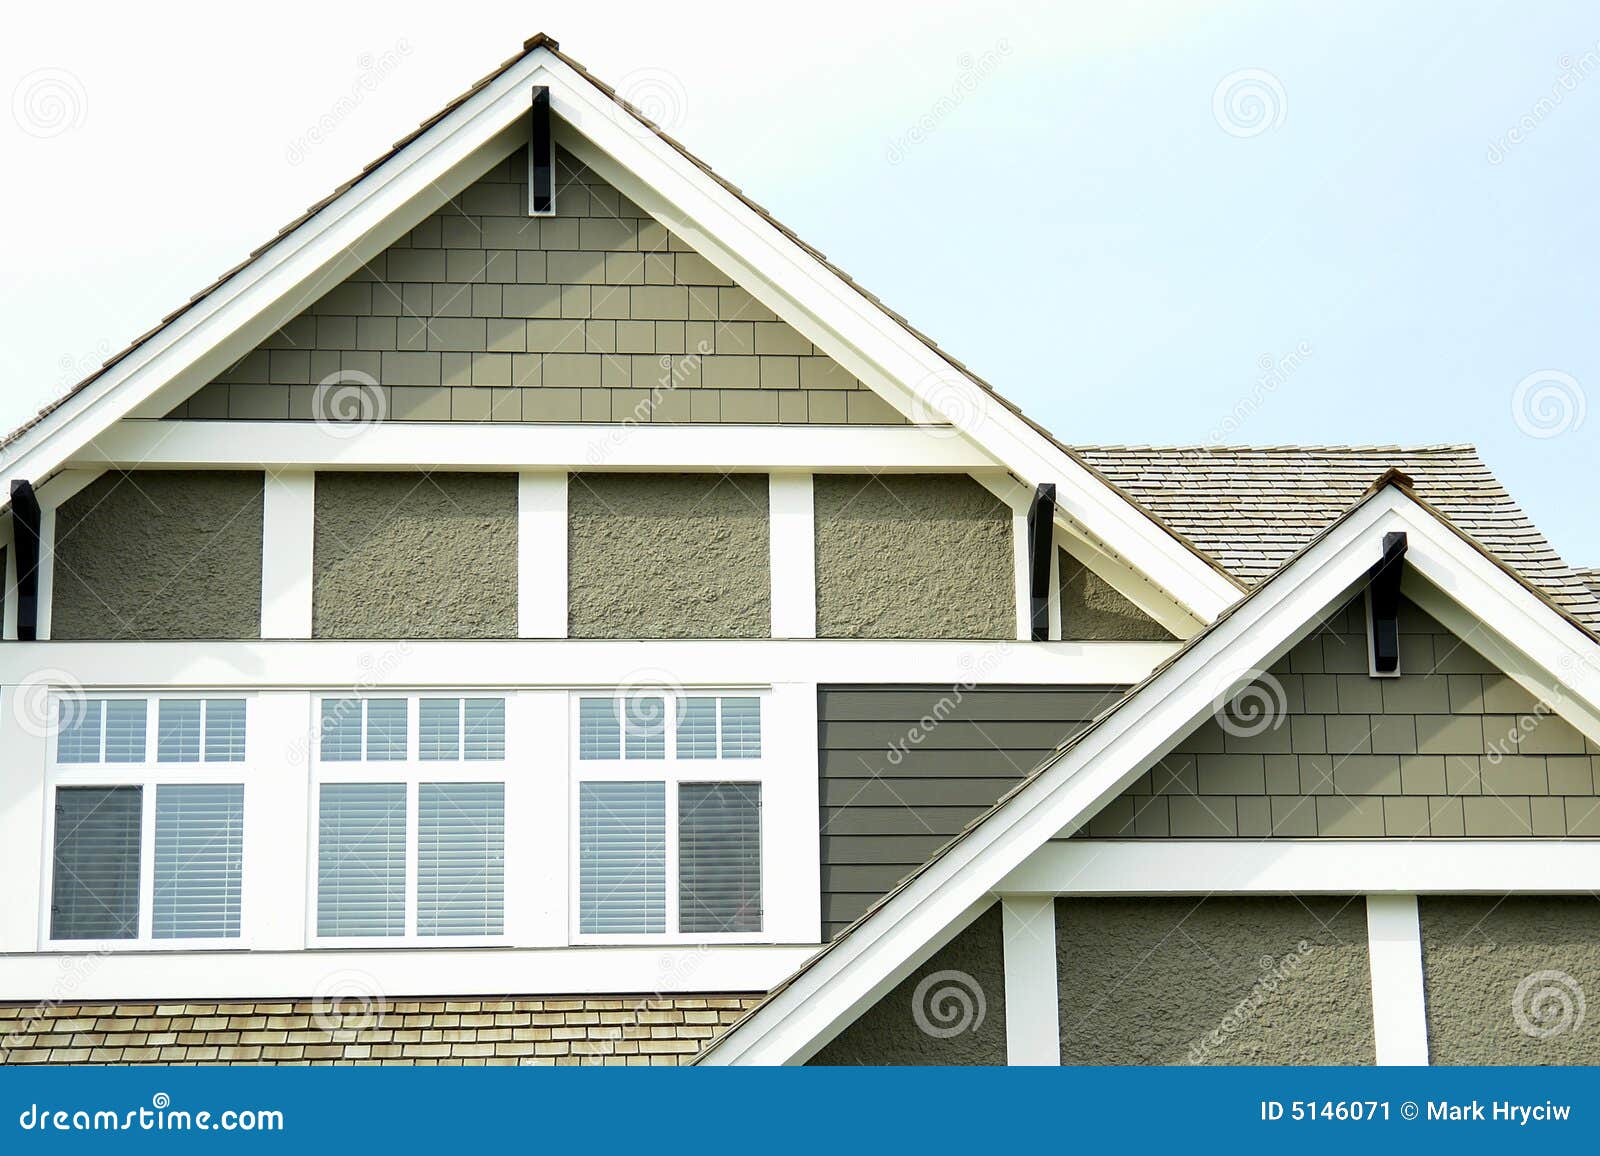 house home roof peaks siding